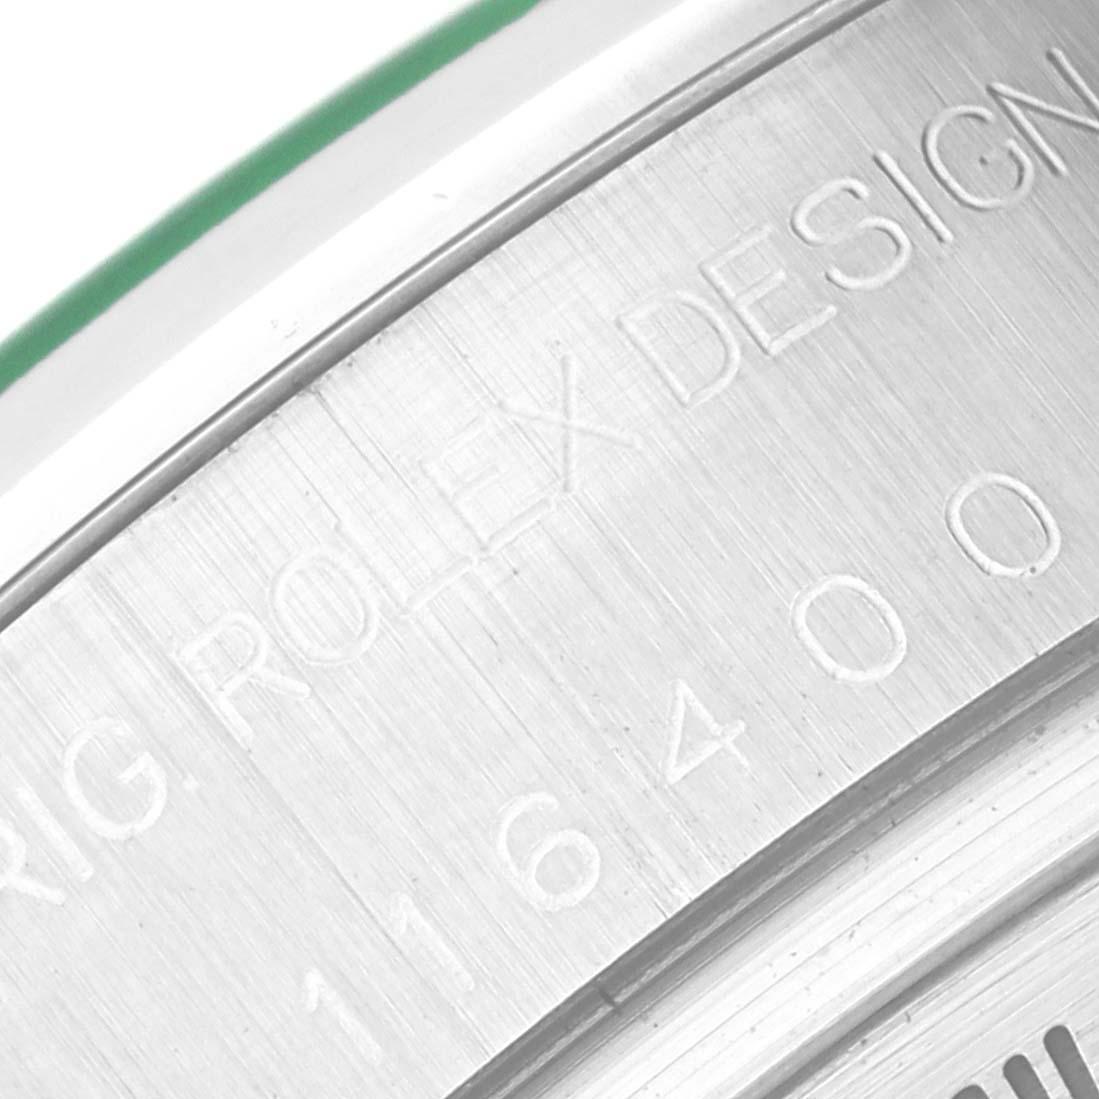 Rolex Milgauss Black Dial Green Crystal Steel Mens Watch 116400 Box Card For Sale 2